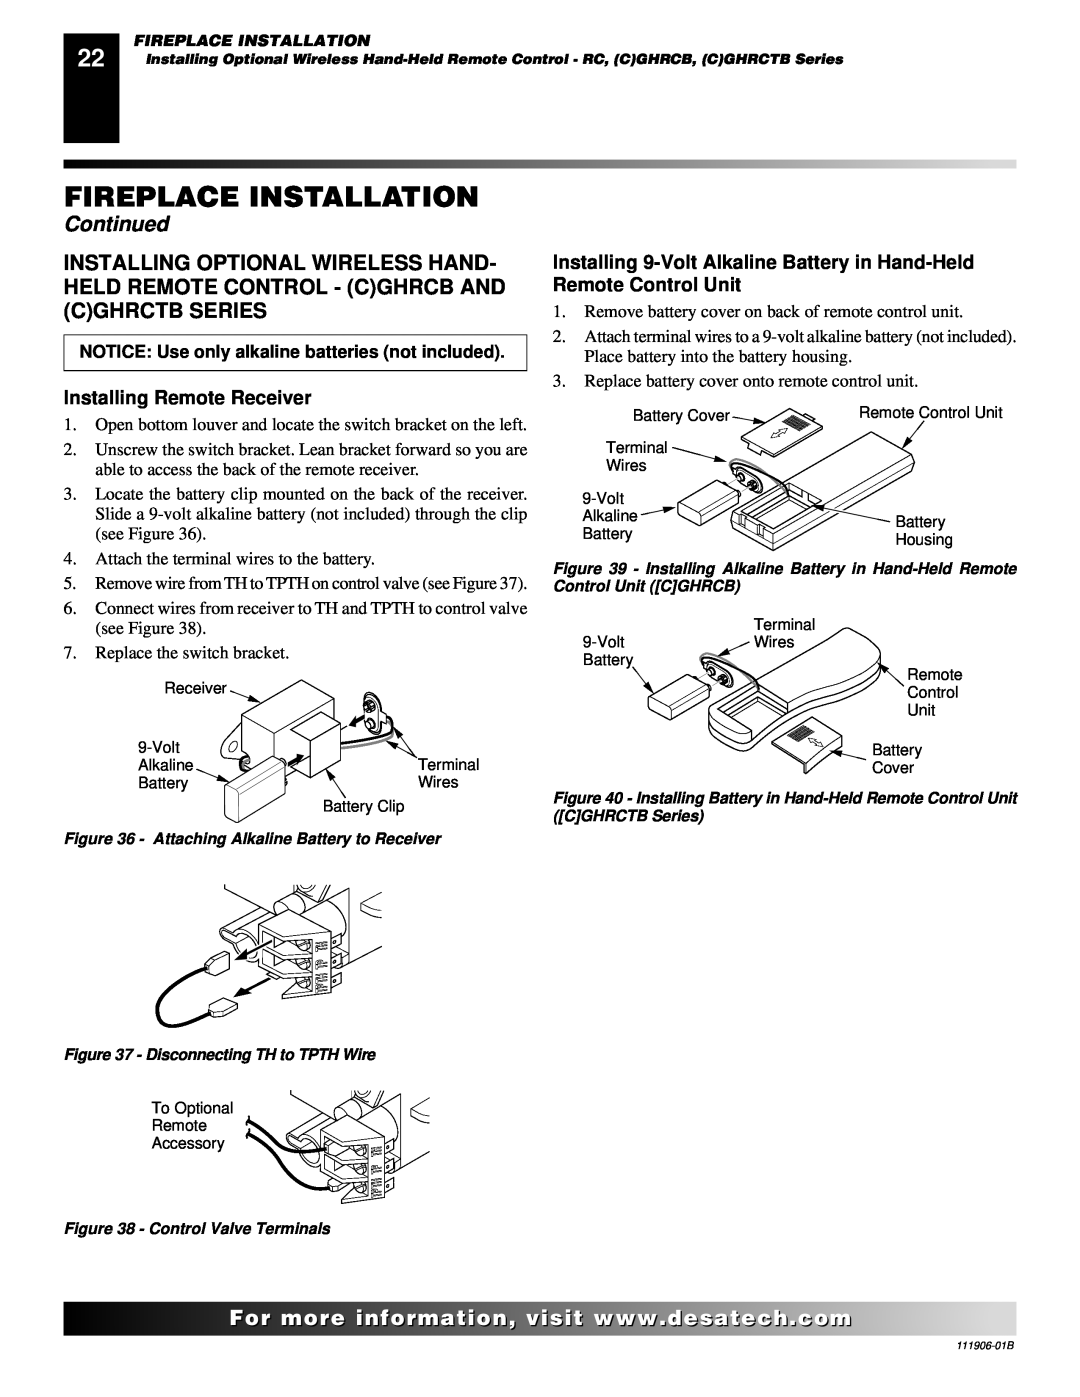 Desa (V)V42PA(1), CHDV42NRA installation manual Fireplace Installation, Continued, Installing Remote Receiver 